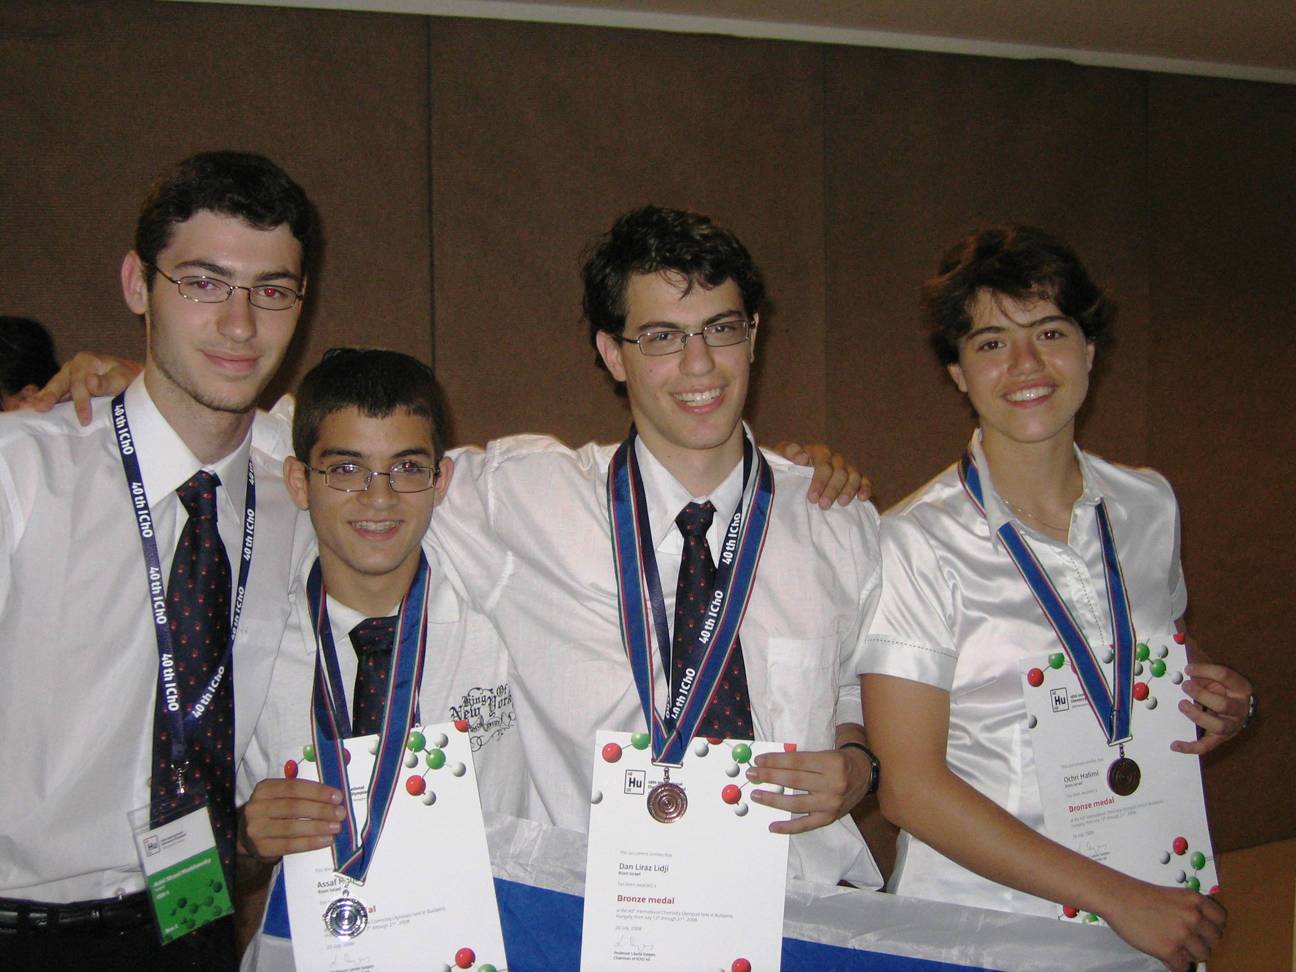 The Israeli winners. From right to left: Dr. Iris Barzilai, Uri Halimi, Dan Liraz, Assaf Ma'oda and Ariel Mahrehovski